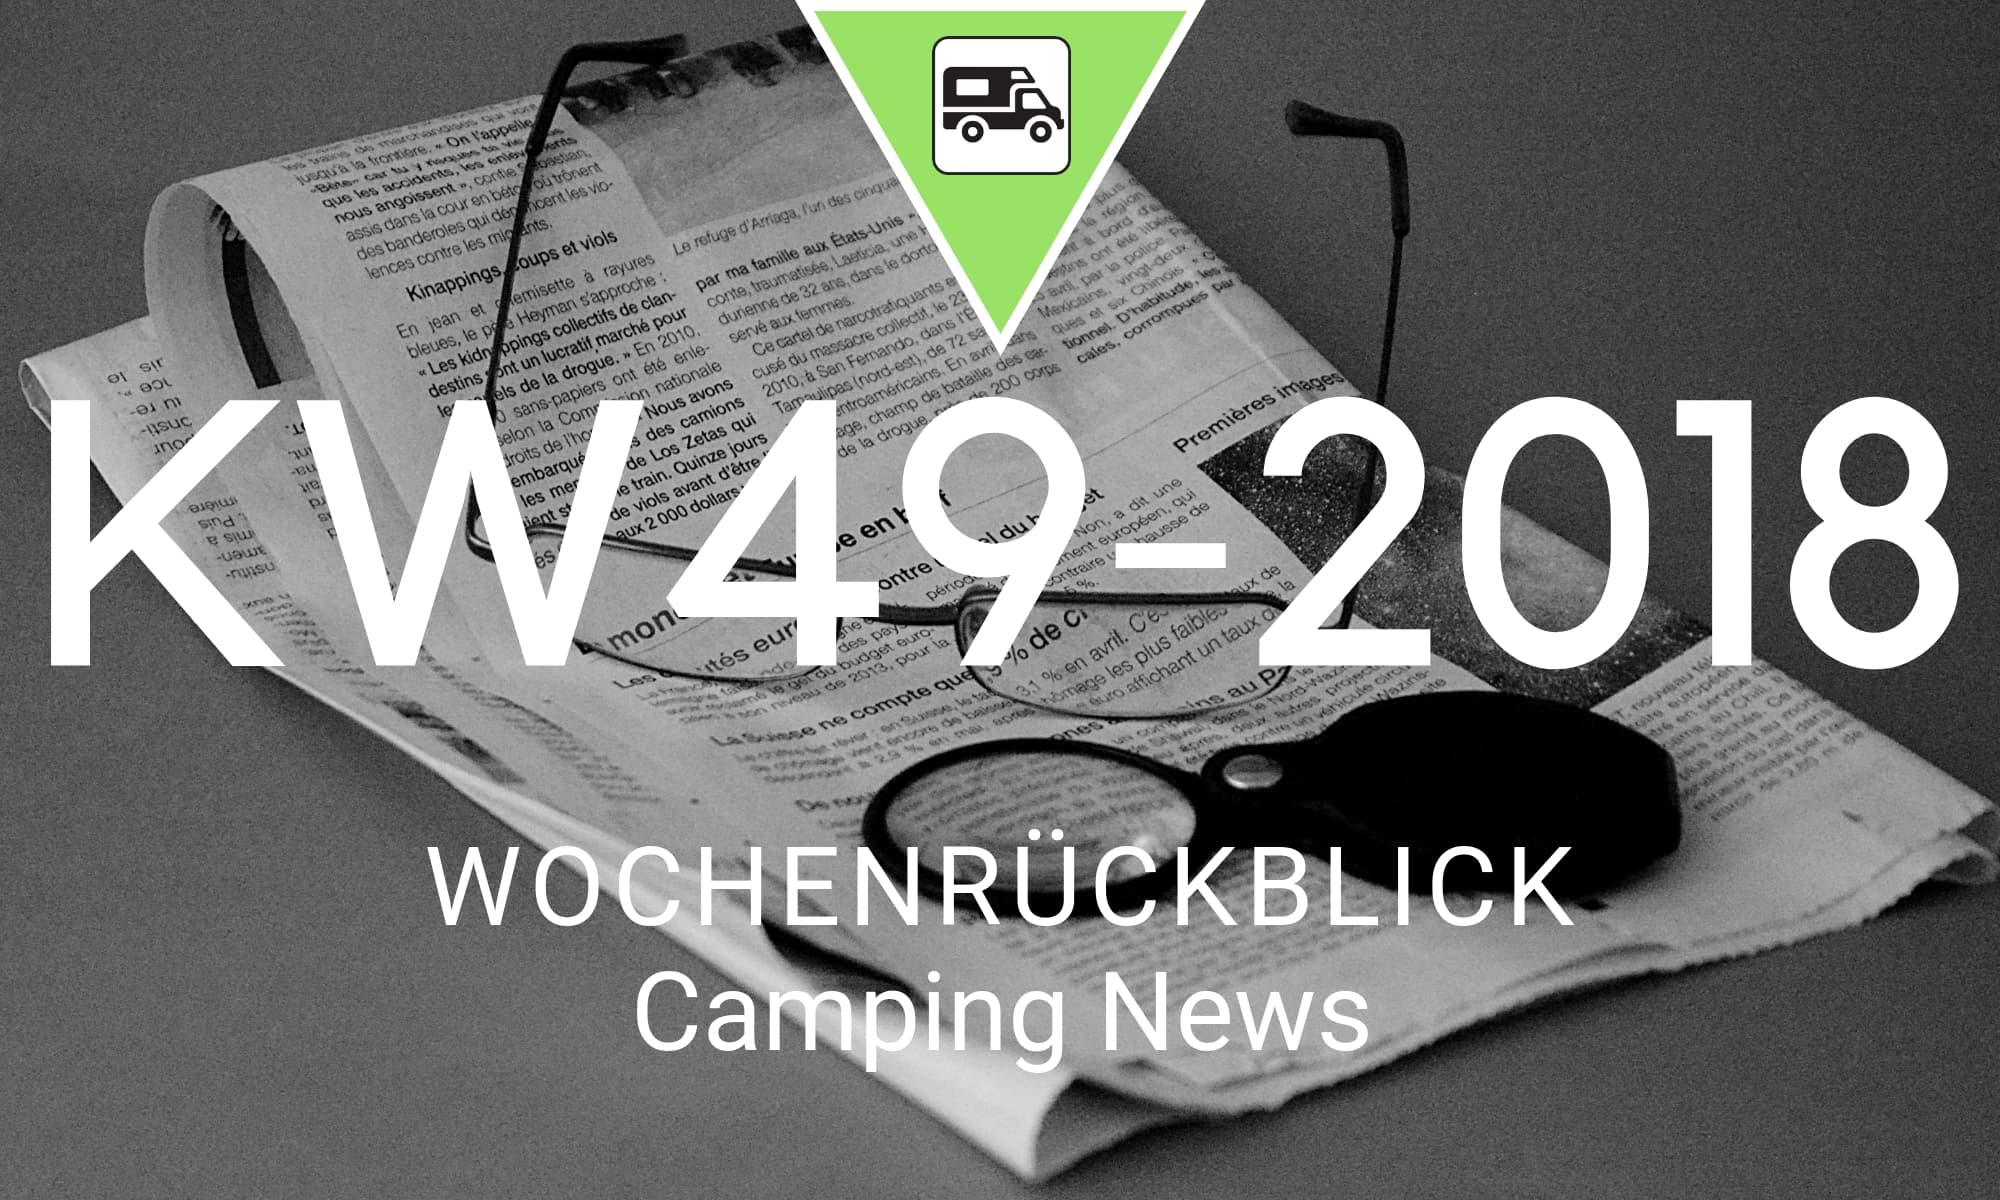 Wochenrückblick Camping News KW49-2018